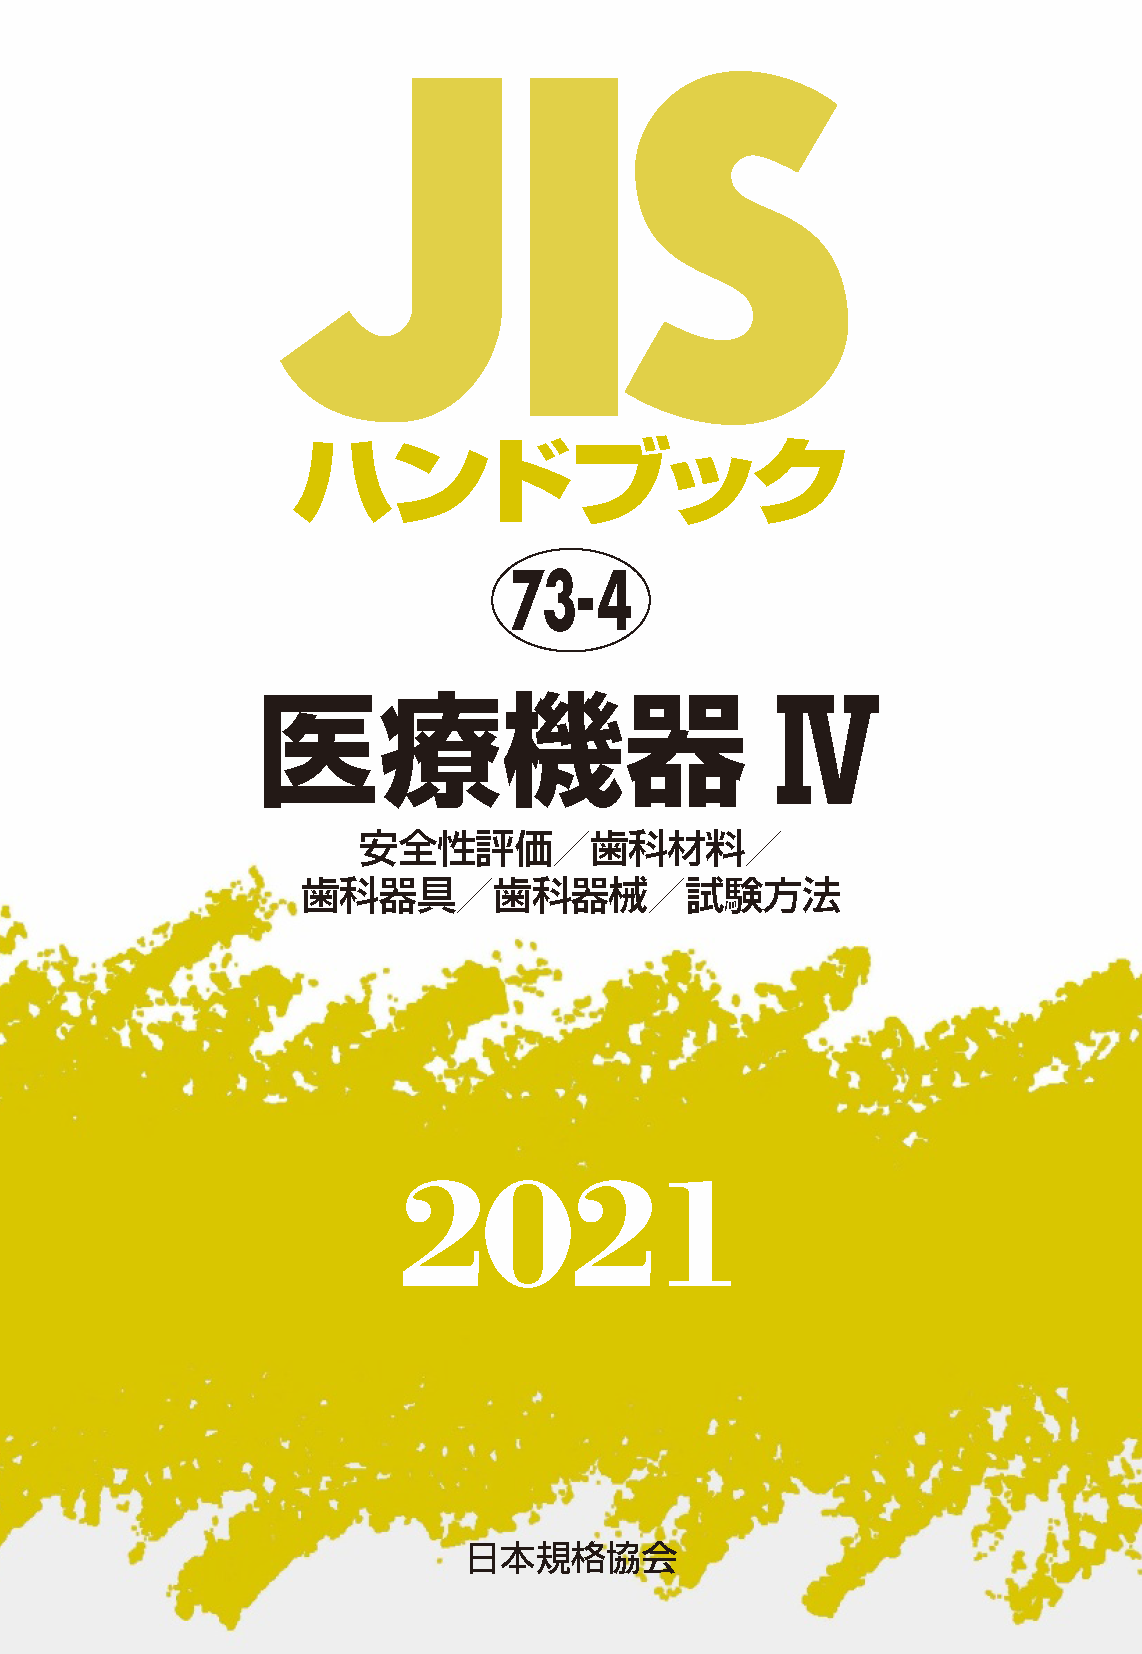 JIS HB 73-4 医療機器 IV 2021 | 日本規格協会 JSA Group Webdesk